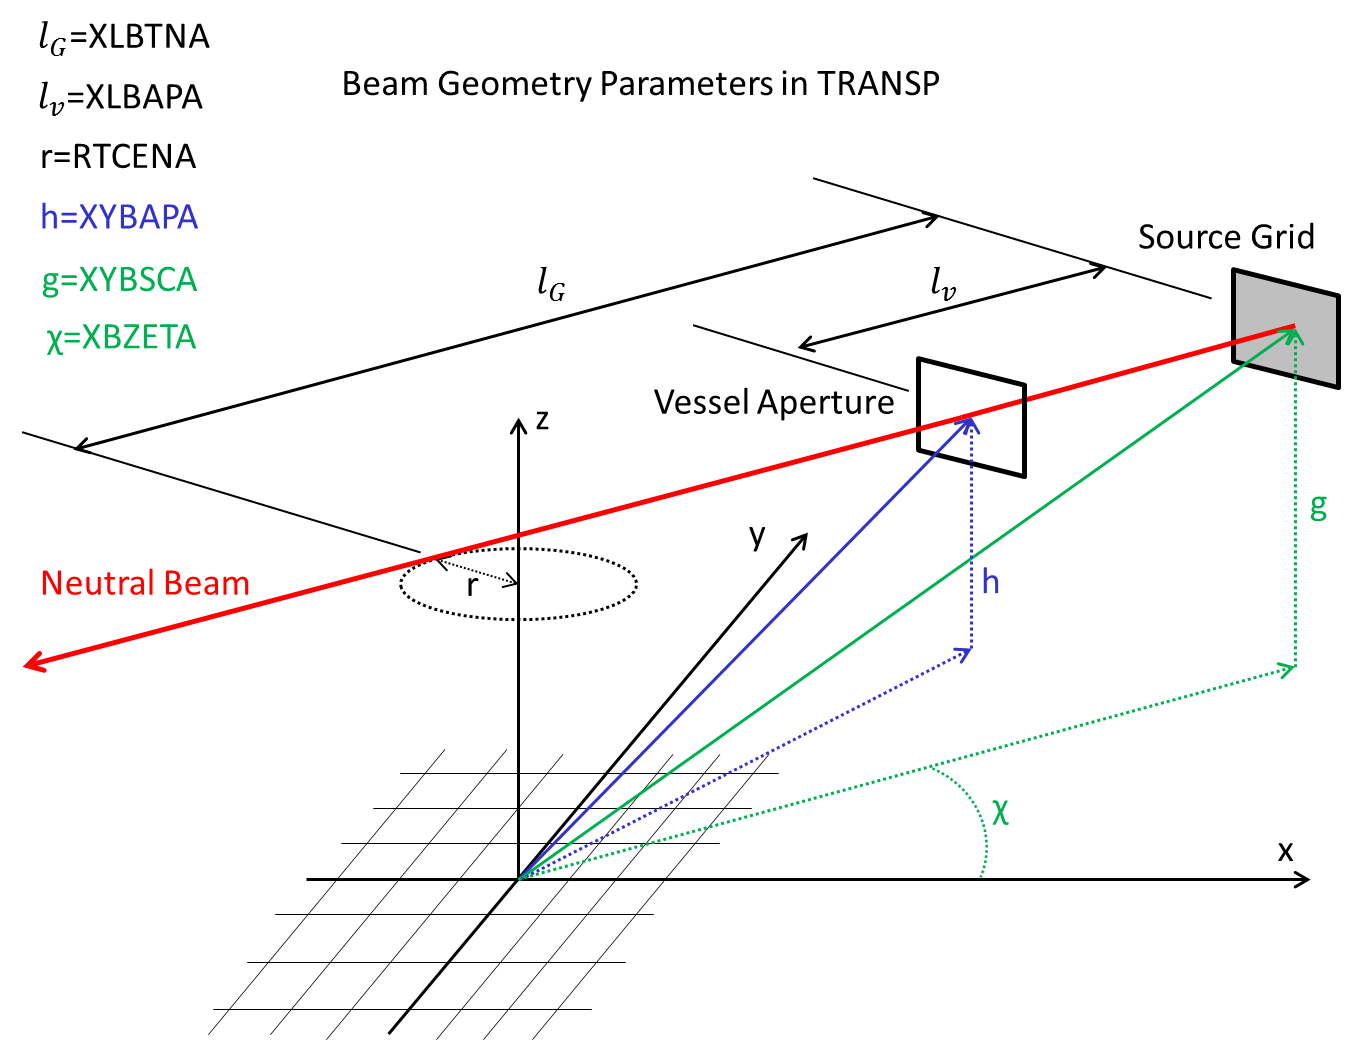 TRANSP beam geometry parameters